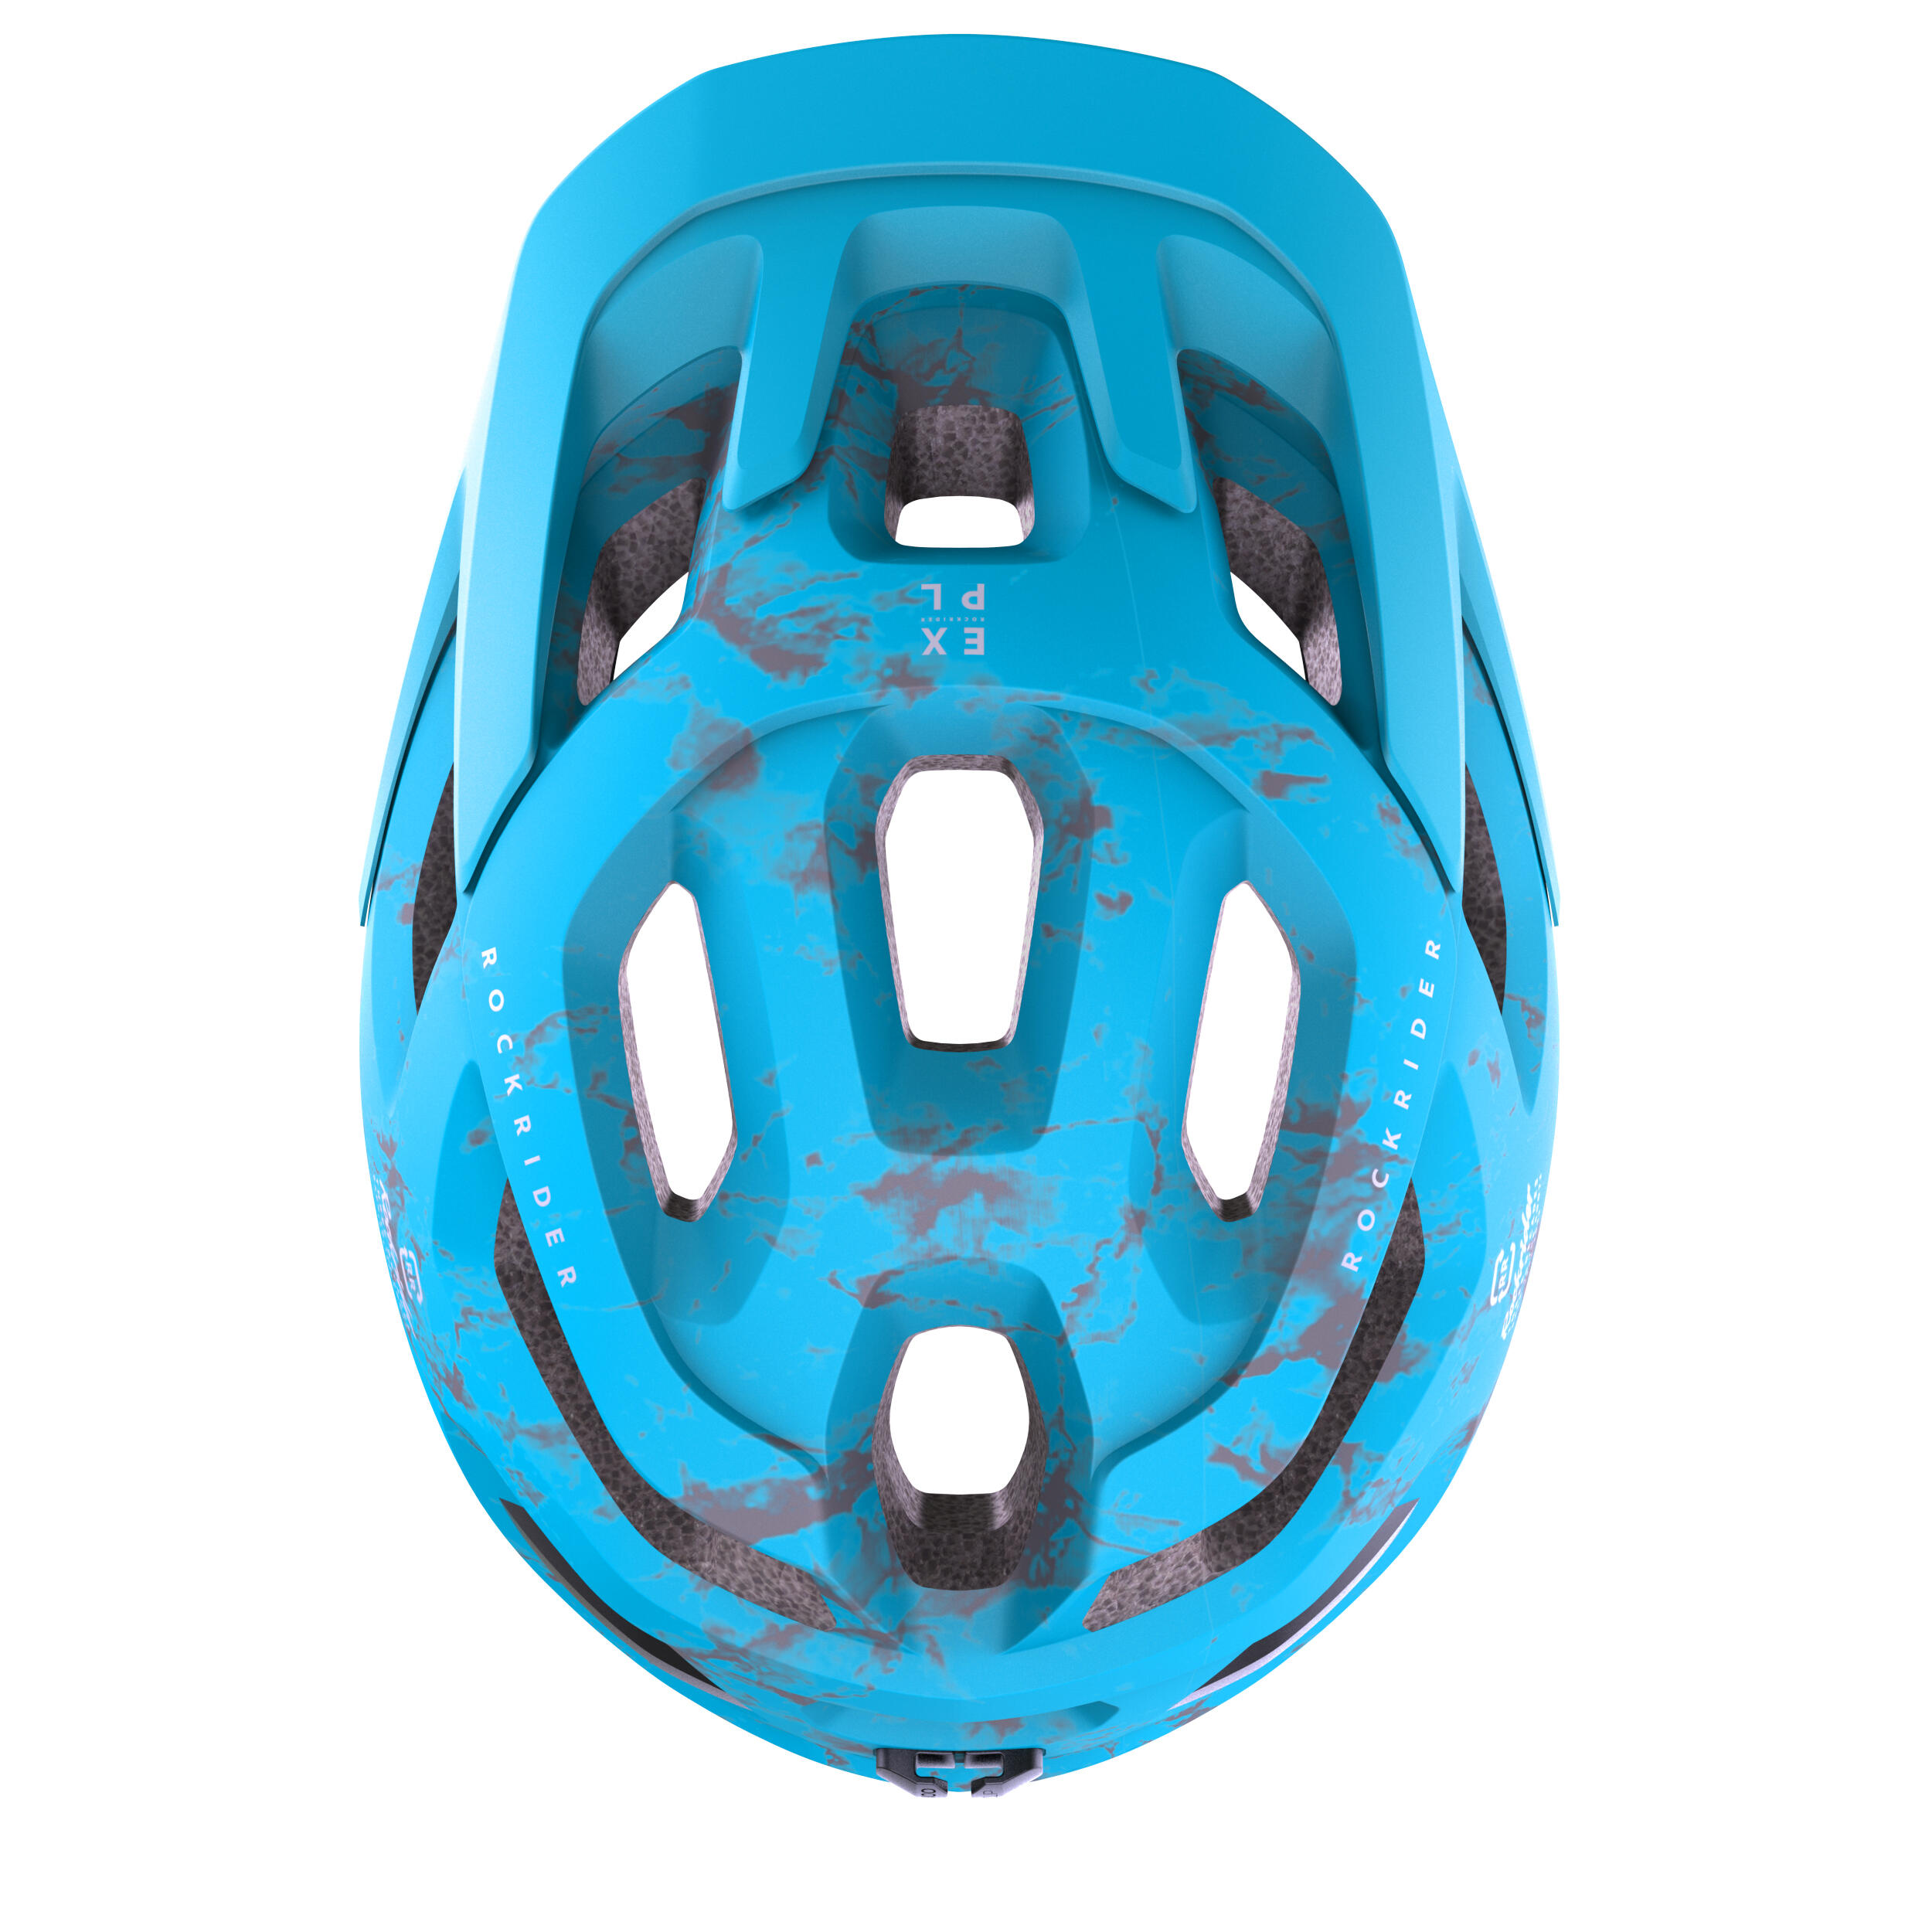 Mountain Bike Helmet EXPL 500 - Turquoise 16/18